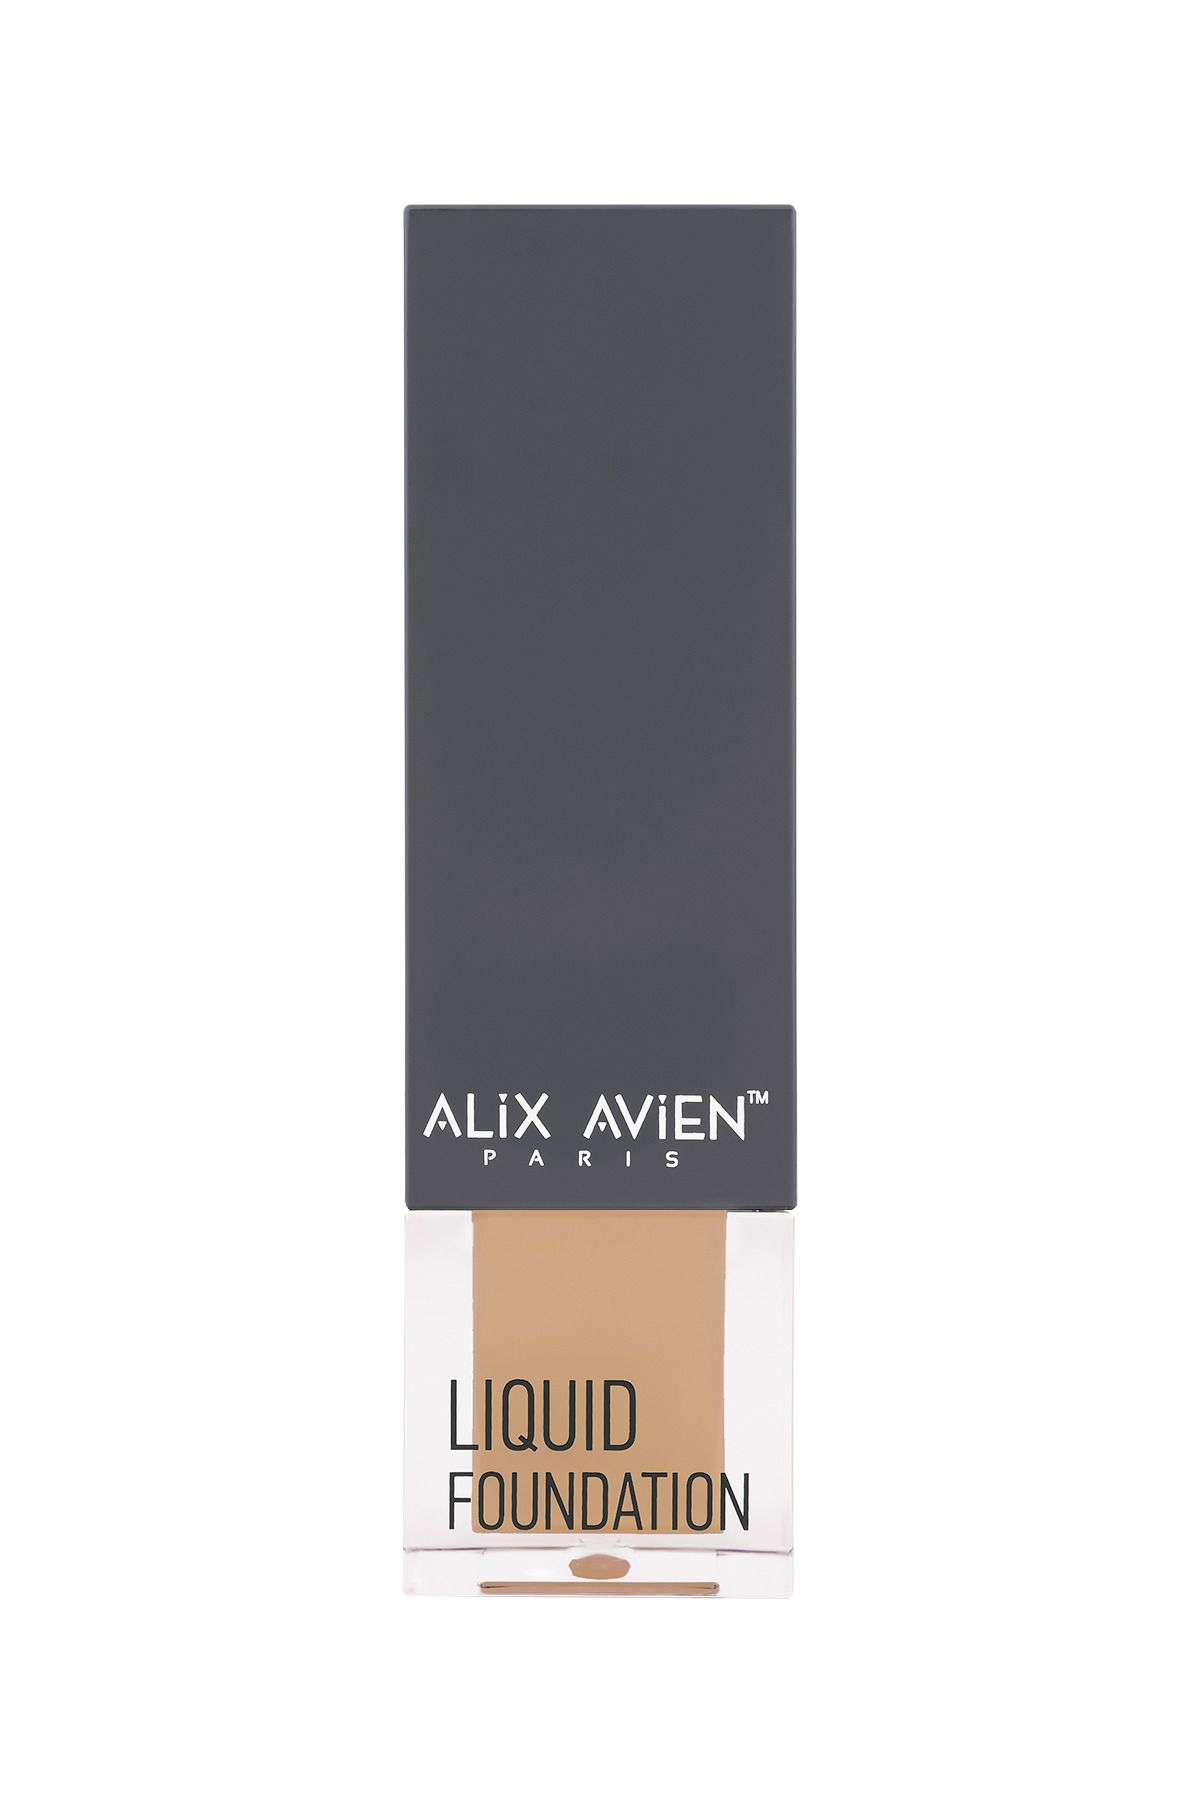 Alix Avien Liquid Foundation 305 Warm Sand-likit Fondöten Ten Makyajı-doğal Parlak Etki Kremsi Yapı-spf 35